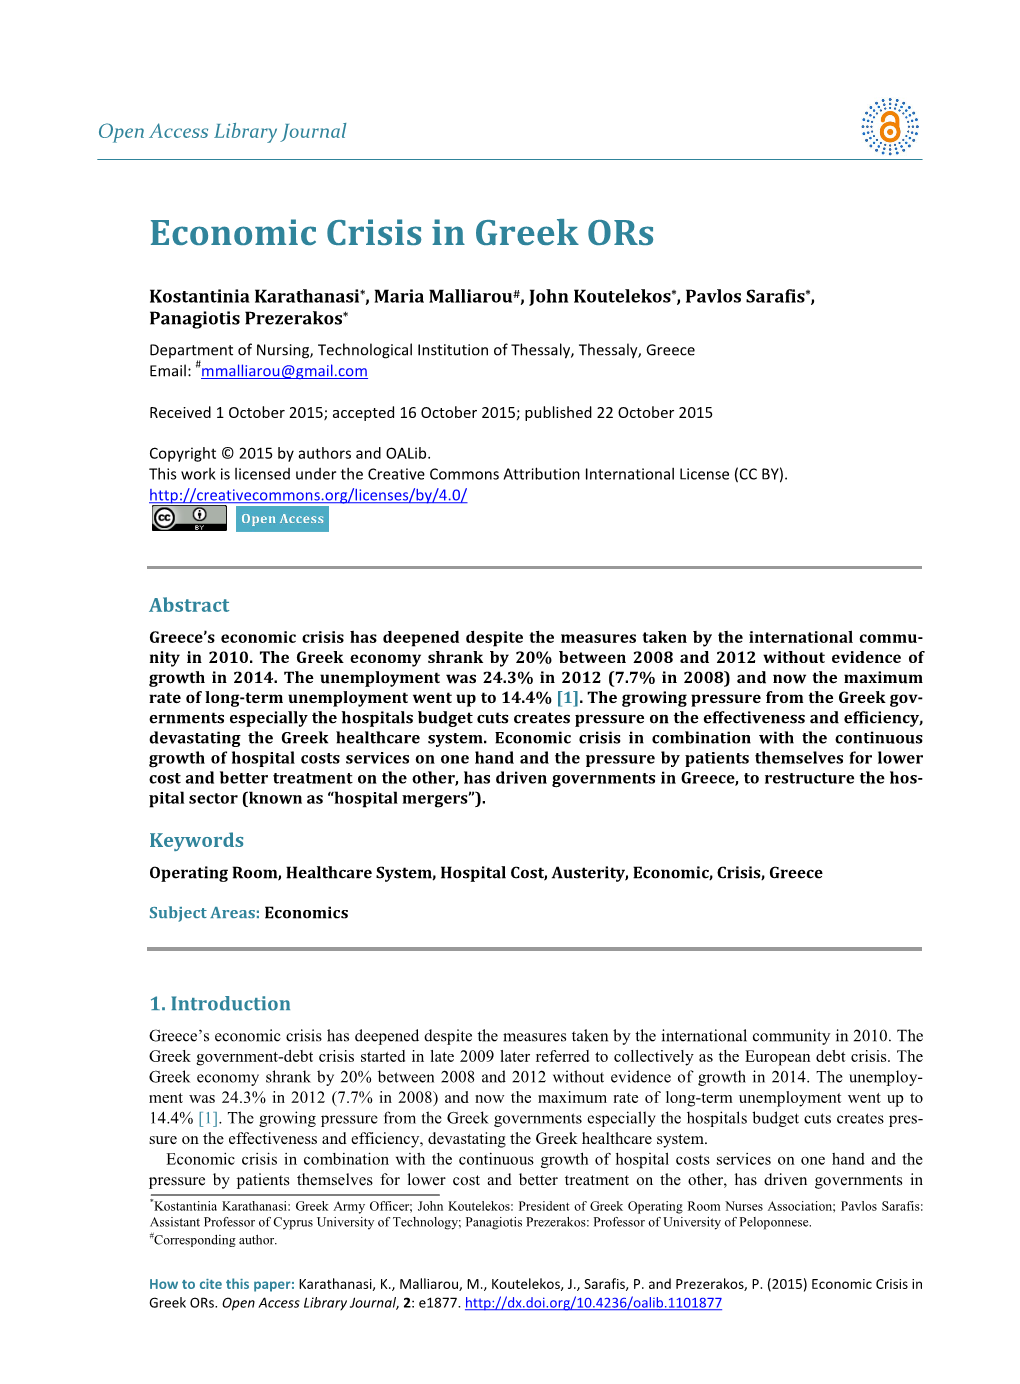 Economic Crisis in Greek Ors